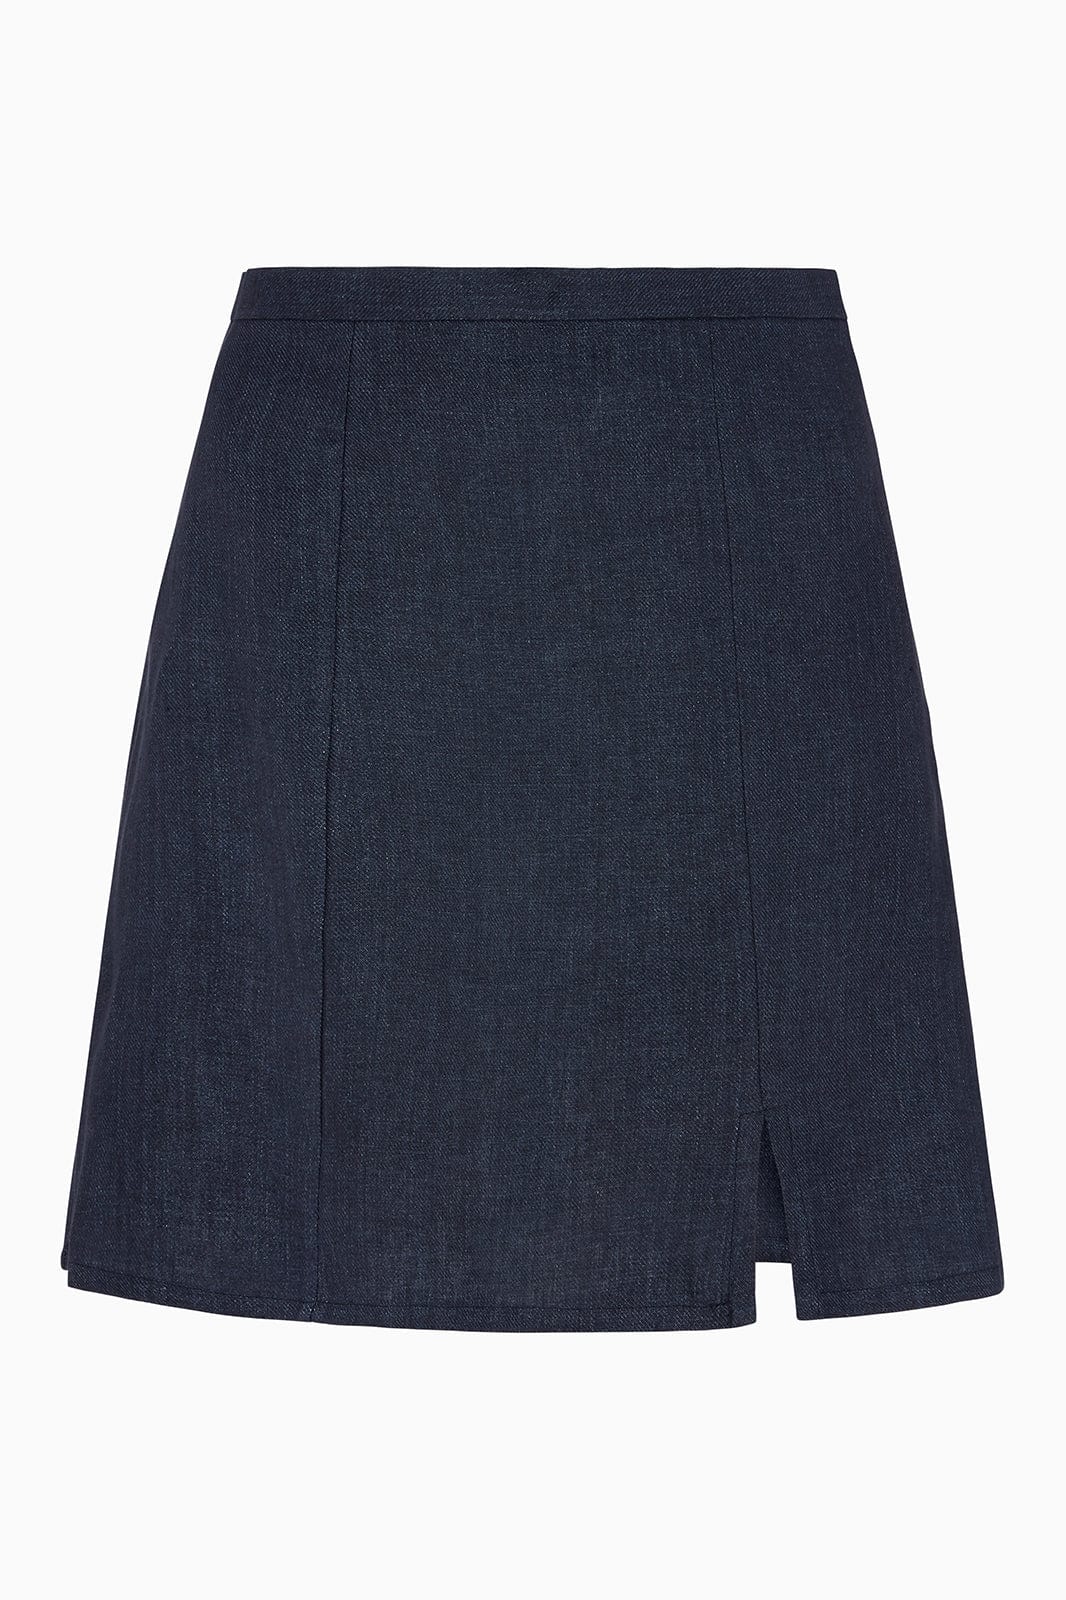 arkitaip The Ruby Mini Skirt in denim blue